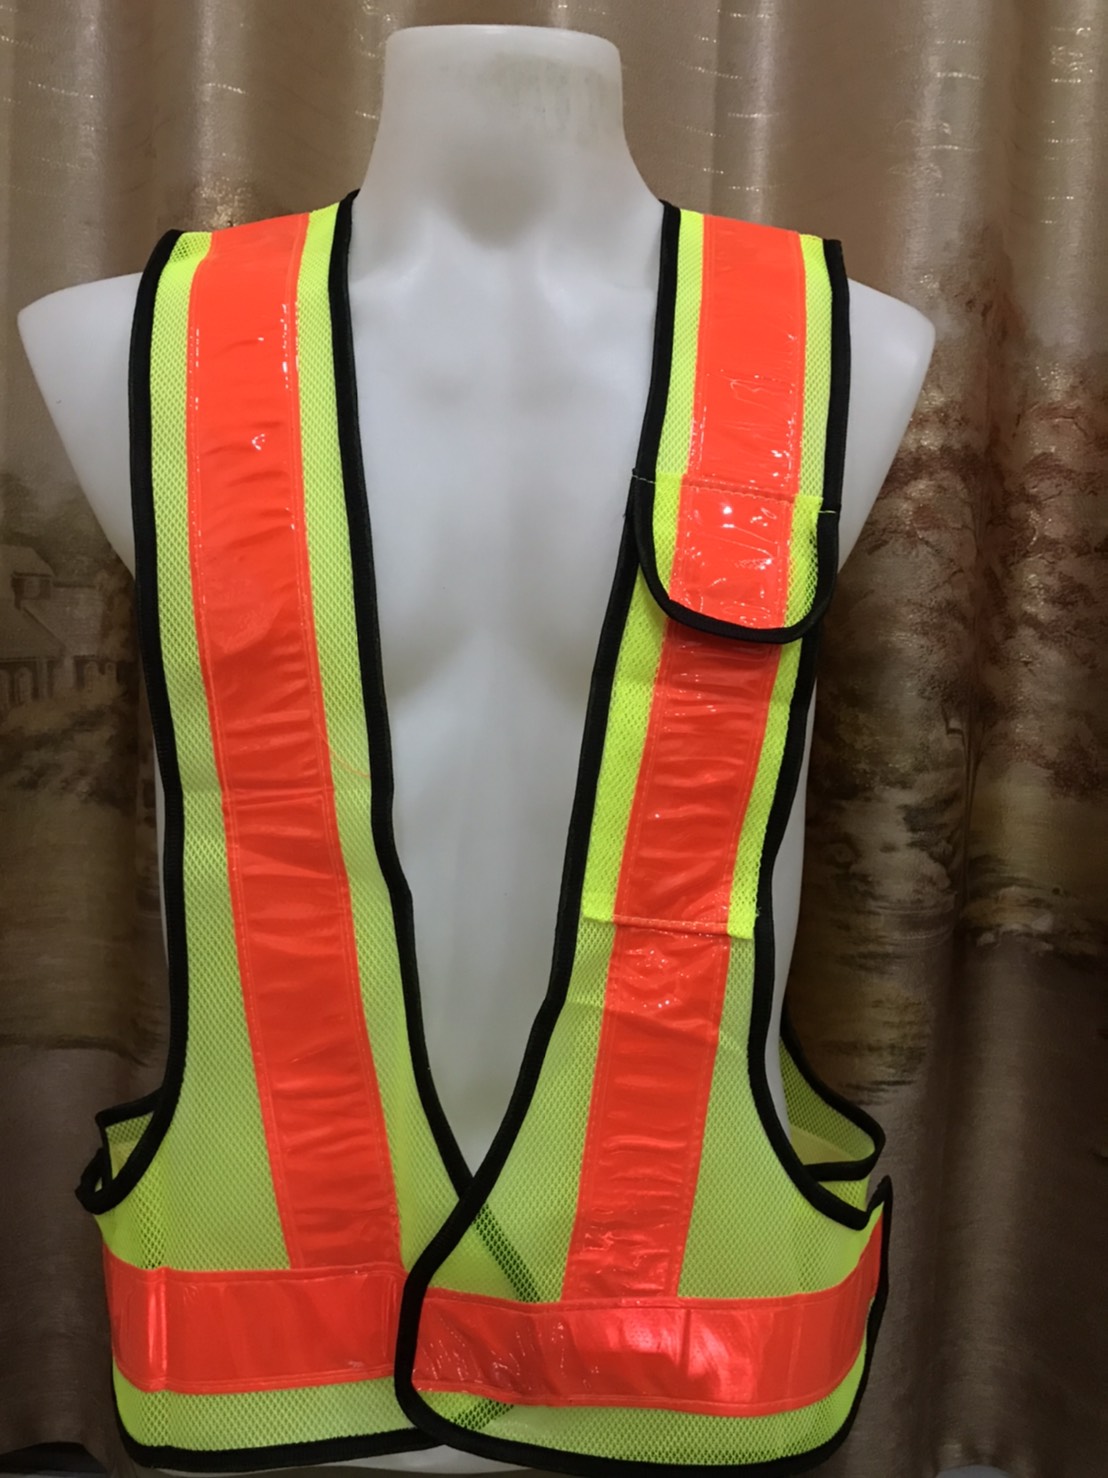 D-Box Safety Vest, Reflective Vest、Work Safety,Safety Products เสื้อกั๊กสะท้อนแสงปรับยืดหยุ่นสายเสื้อกล้ามสำหรับวิ่งปั่นจักรยานจ๊อกกิ้งMulti Adjustable Outdoor Safety Visibility Reflective Vest Gear Stripes